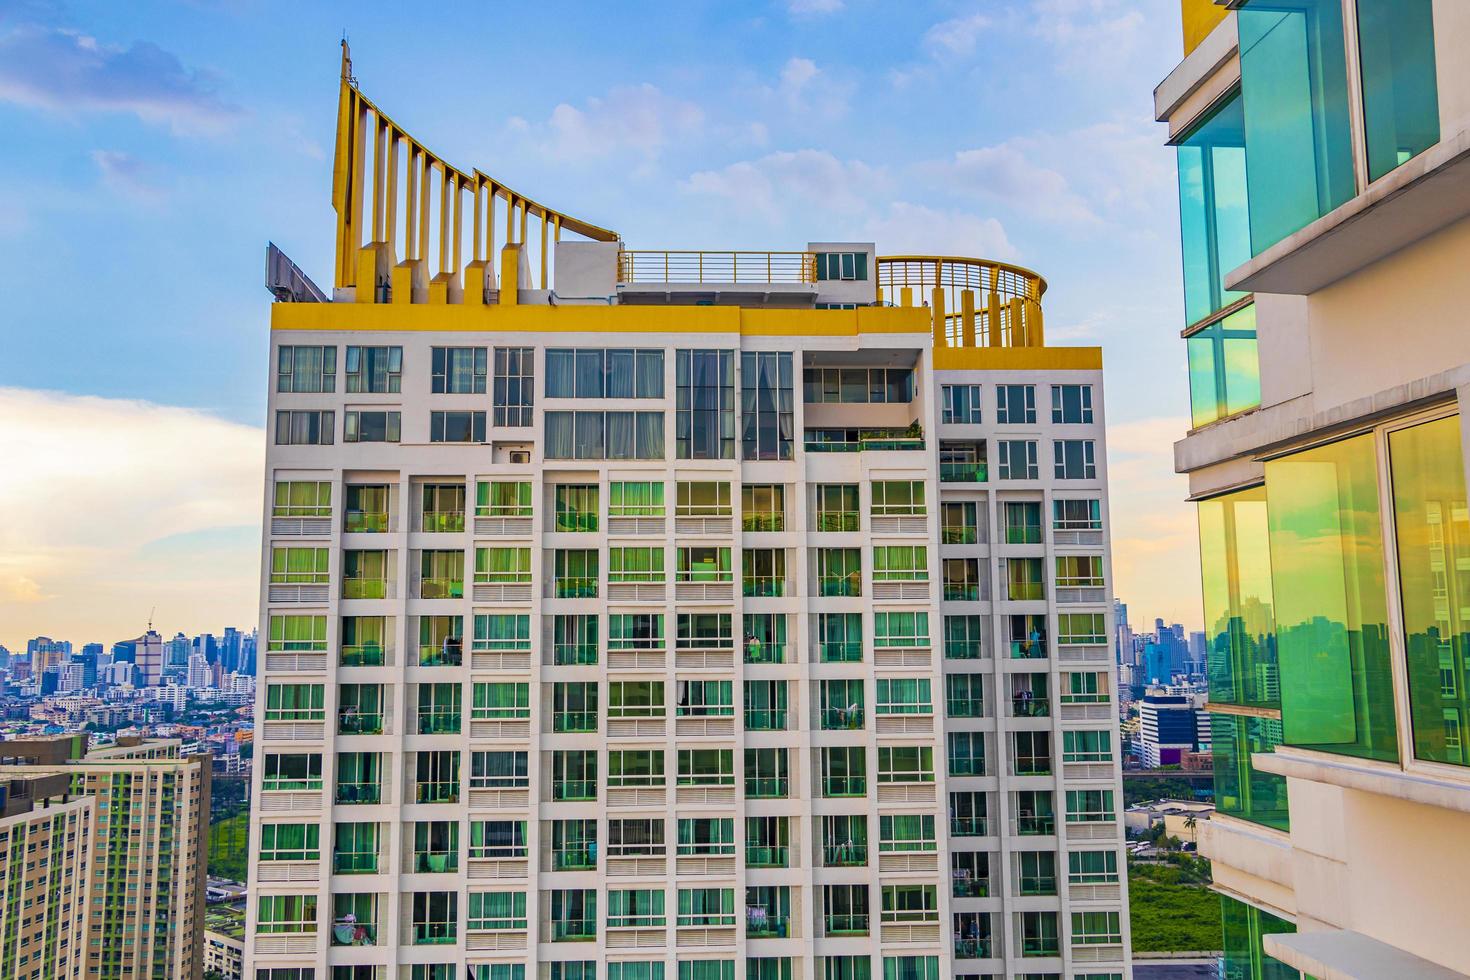 färgglad modern arkitektur i bangkok, thailand, 2018 foto